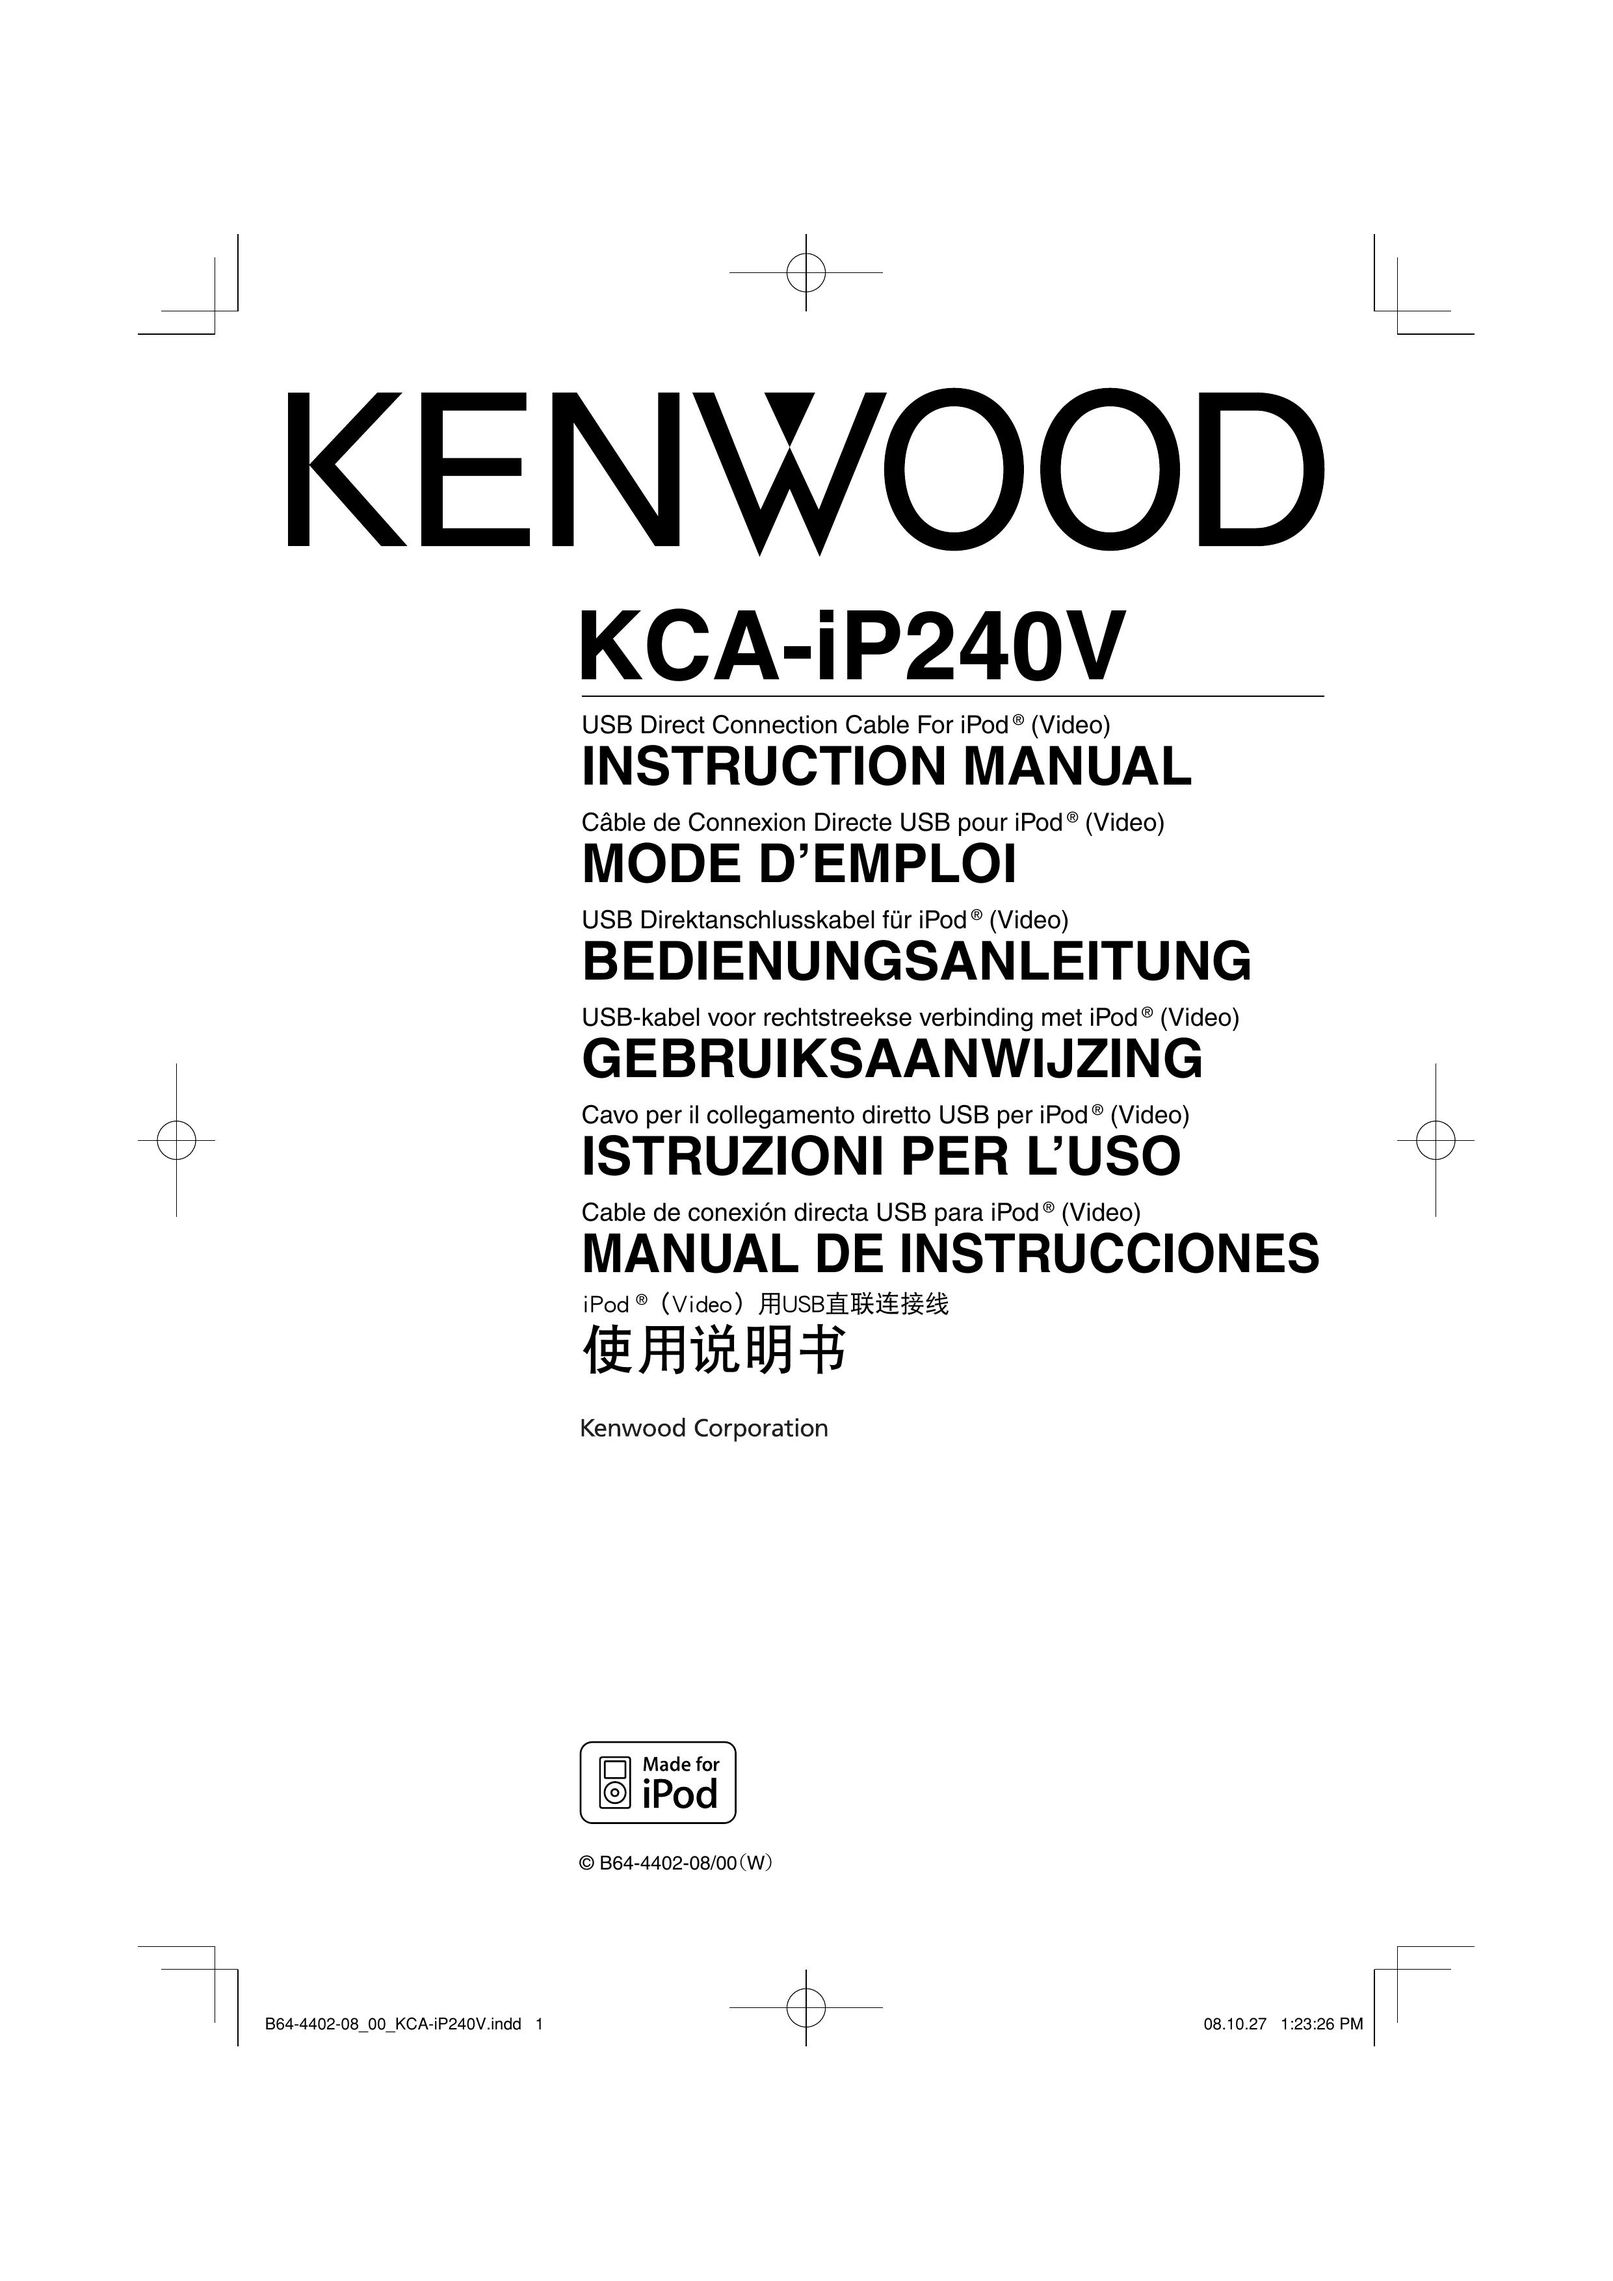 Kenwood KDV-5241U MP3 Player Accessories User Manual